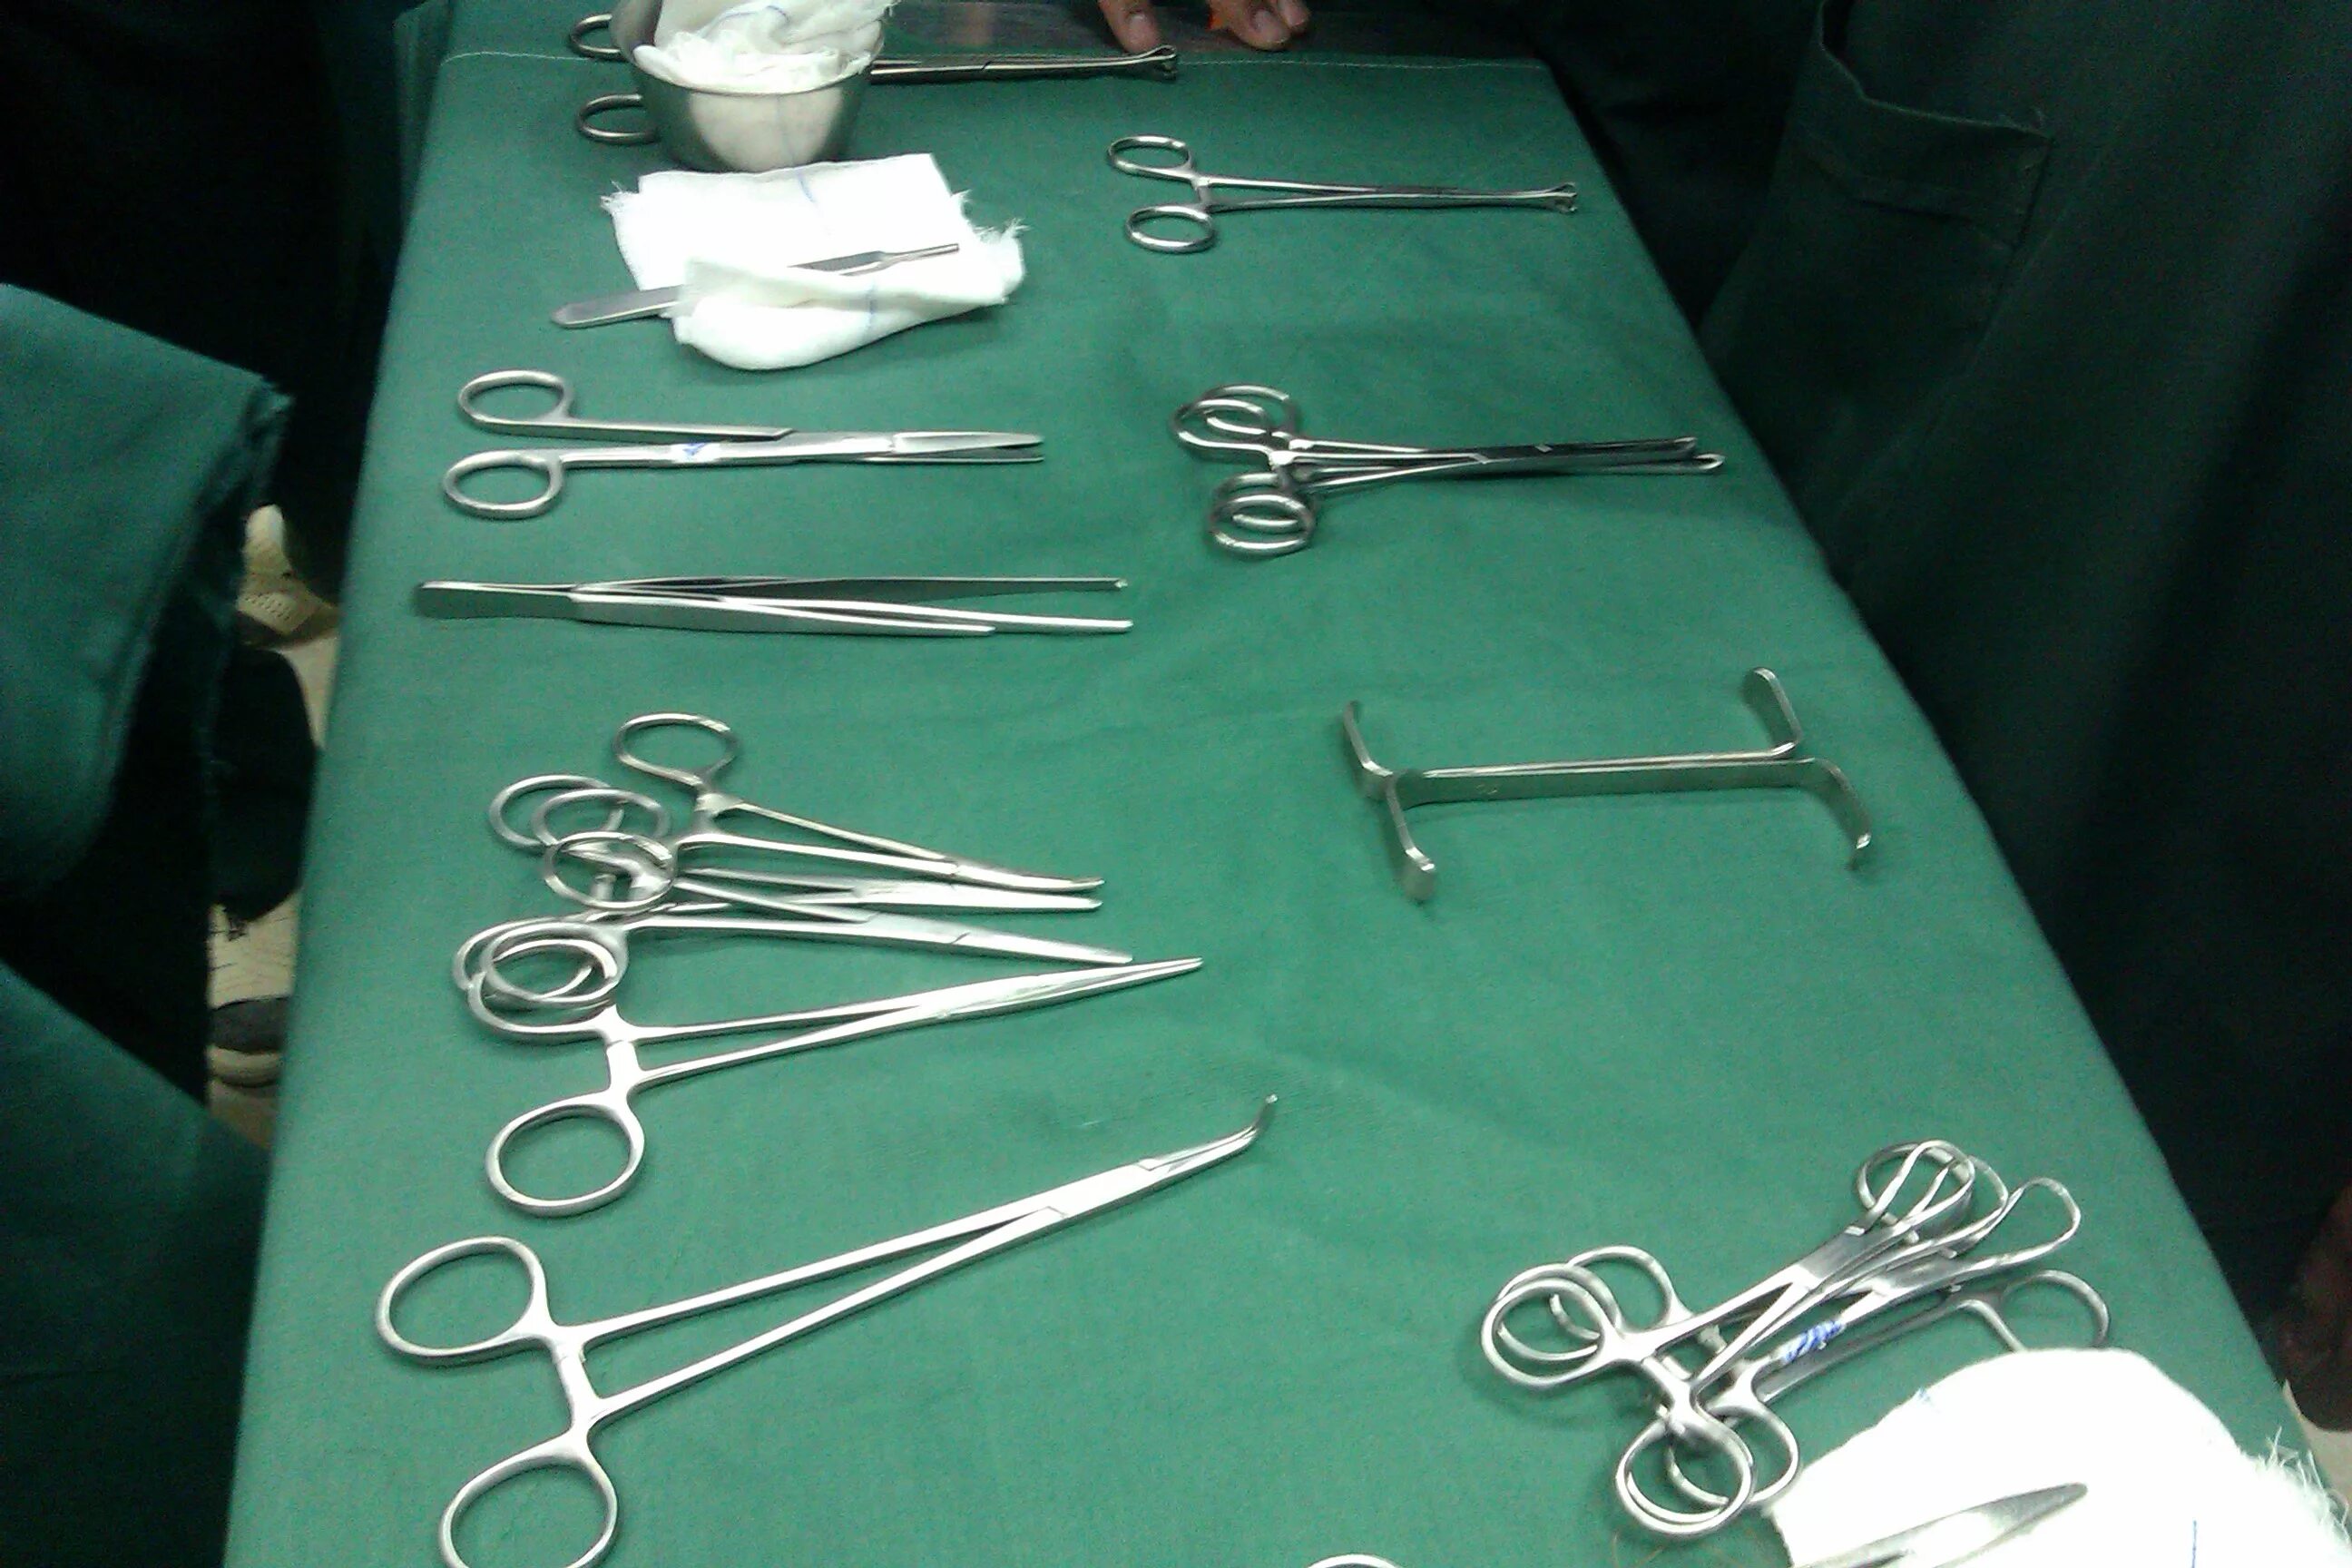 Surgery 1. Хирургические инструменты. Инструменты хирурга. Инструменты в операционной. Инструменты операционные хирургические.